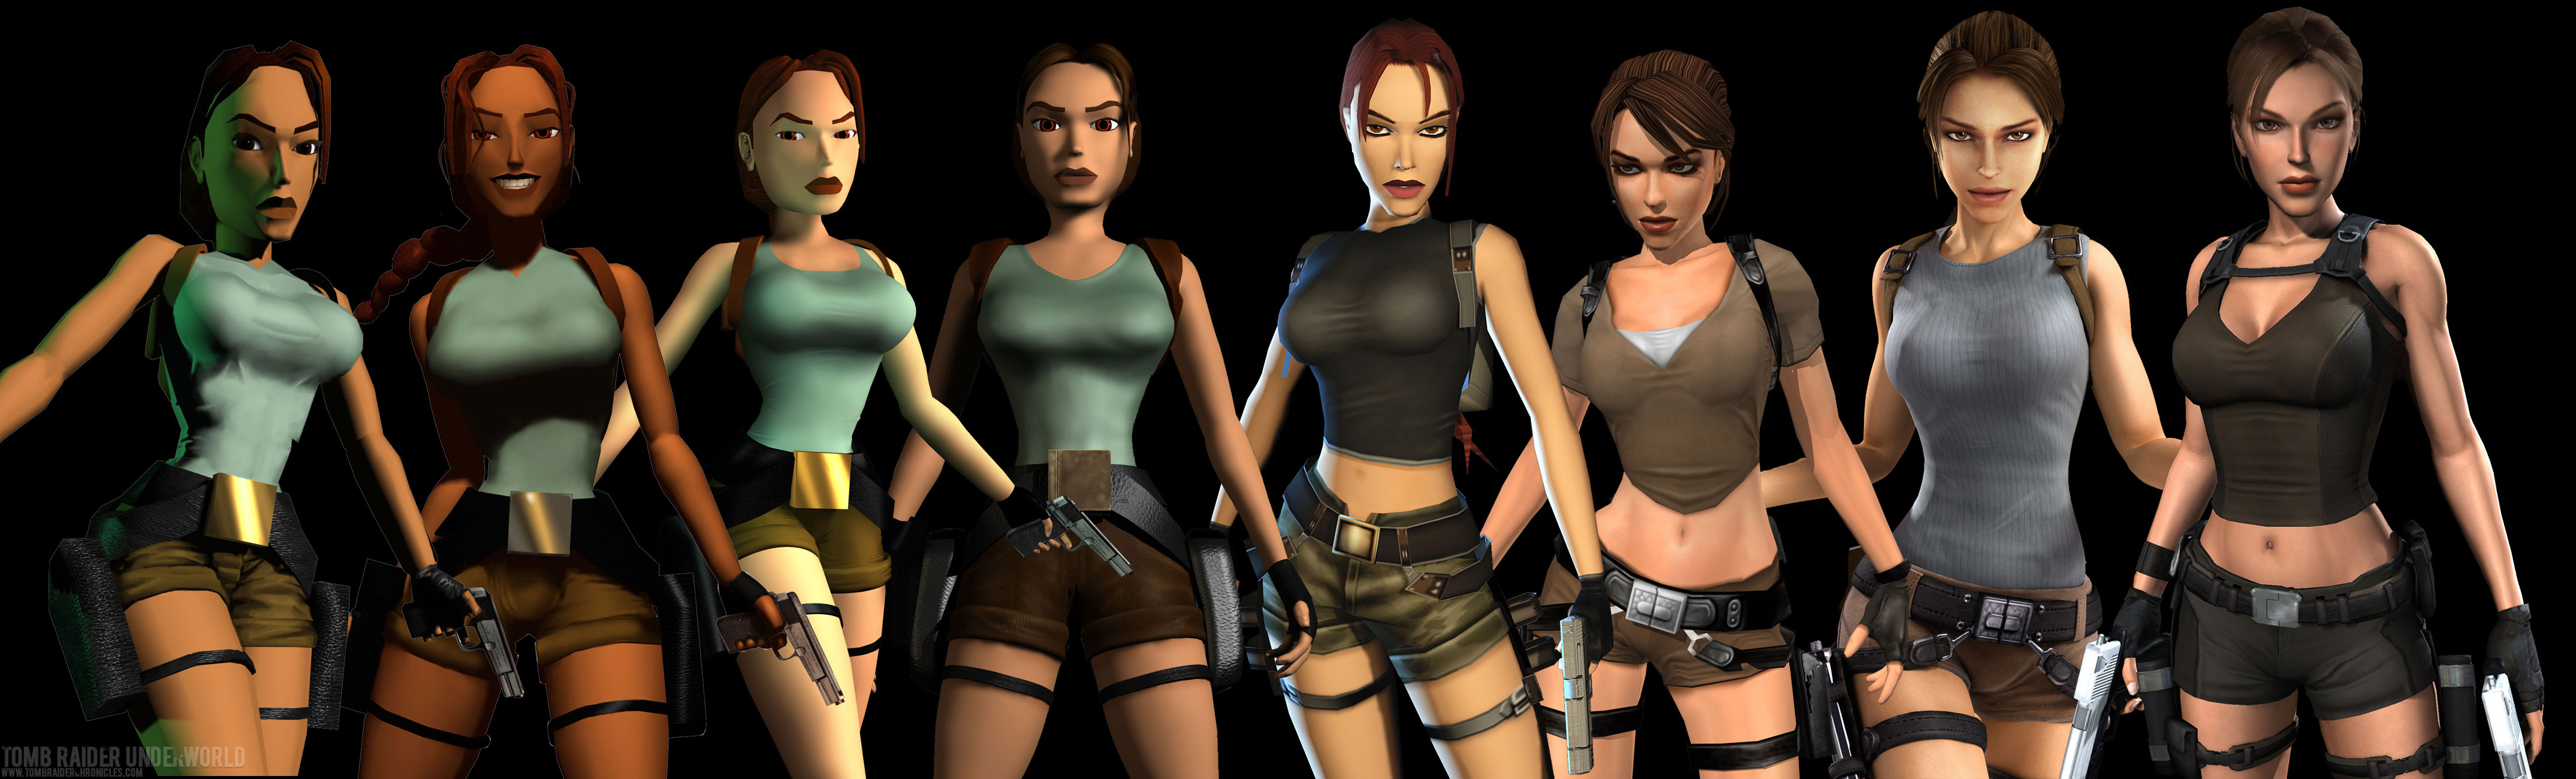 10 curiosidades sobre a franquia de filmes Lara Croft – Tomb Raider